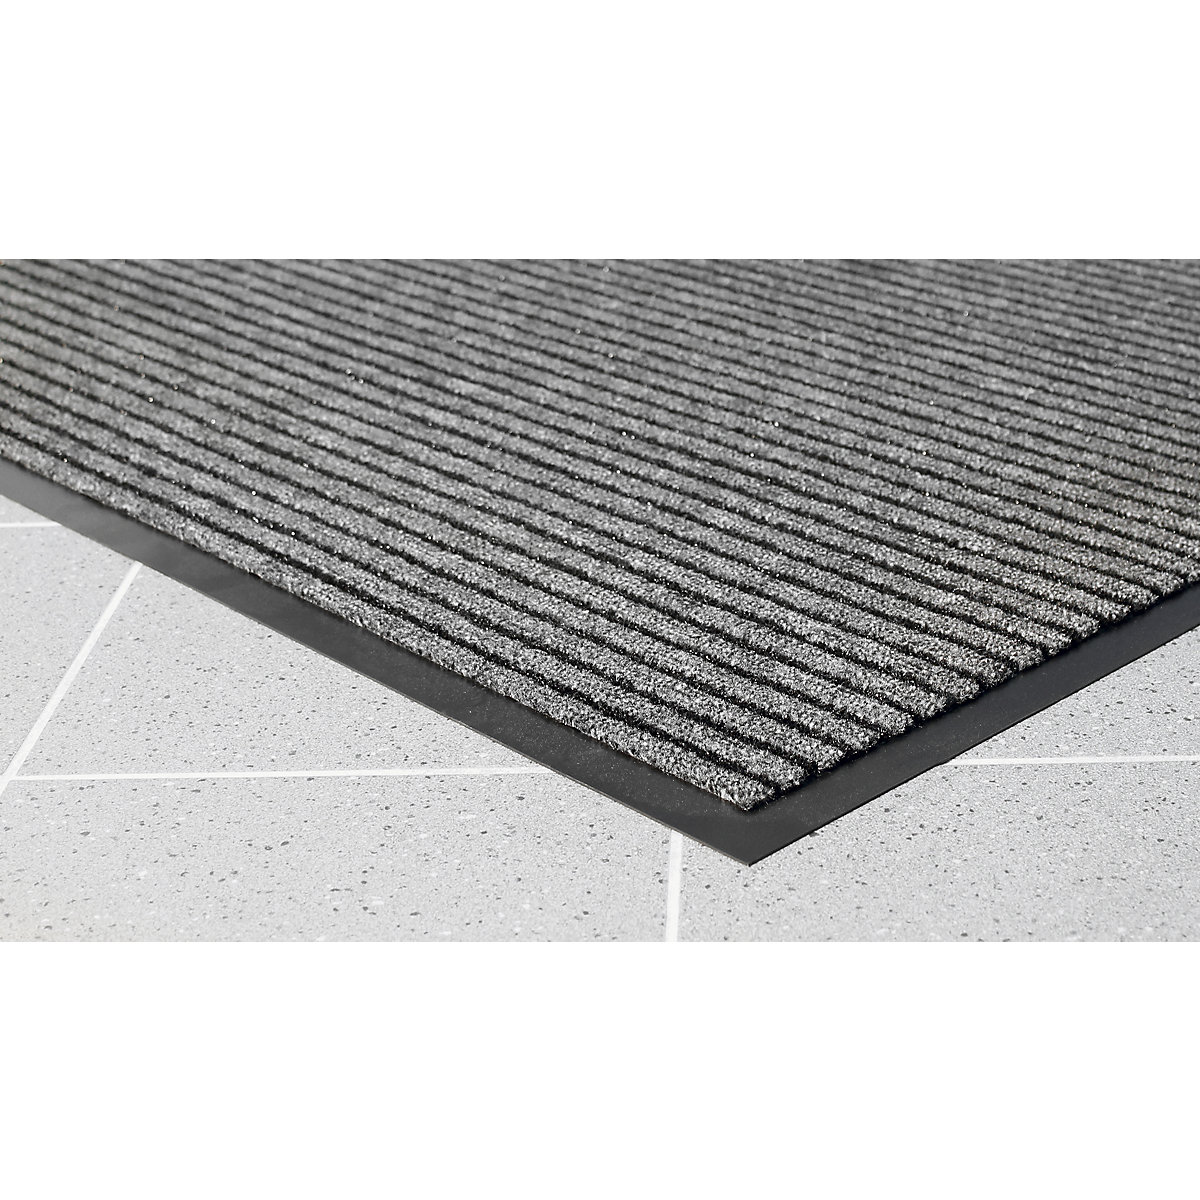 Brush entrance matting, LxW 1500x900 mm, charcoal striped